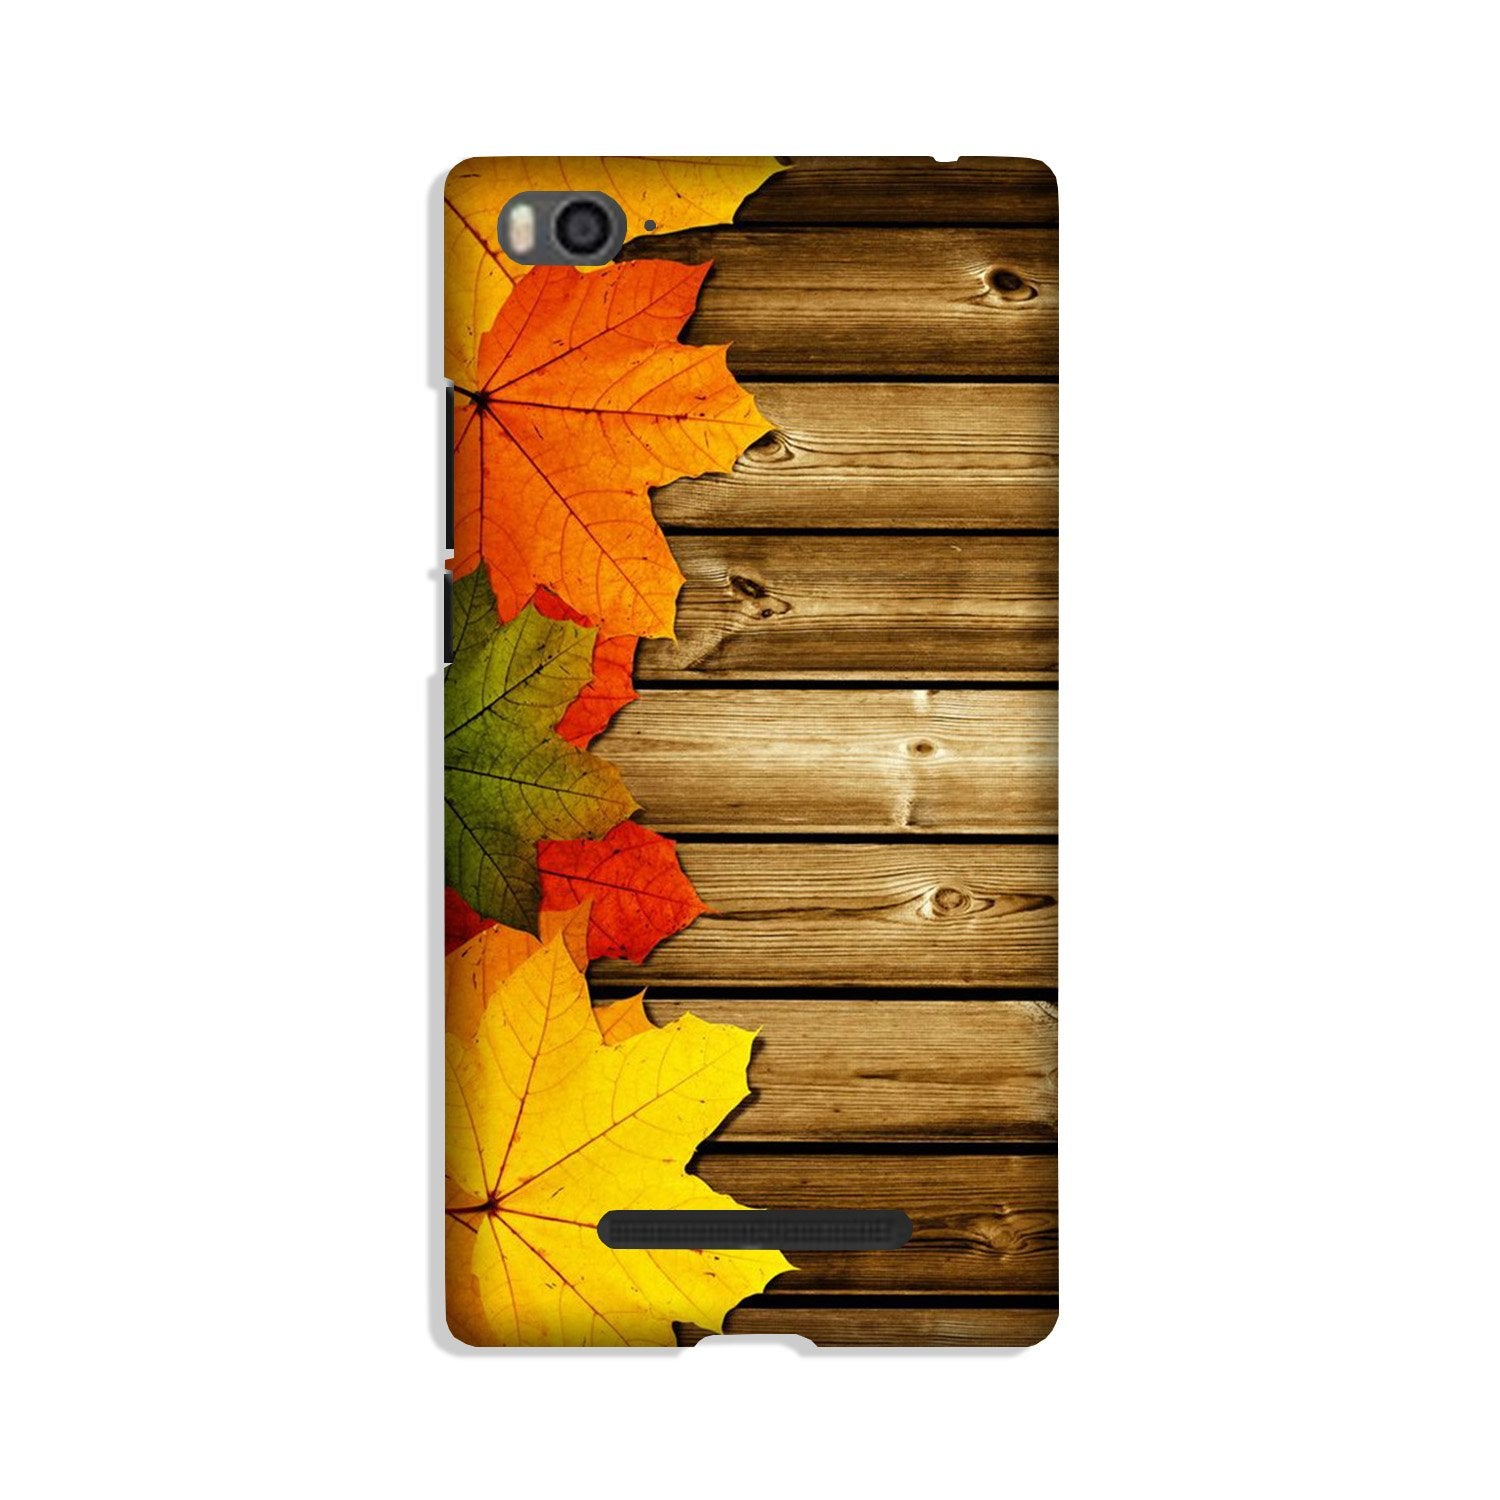 Wooden look3 Case for Xiaomi Mi 4i